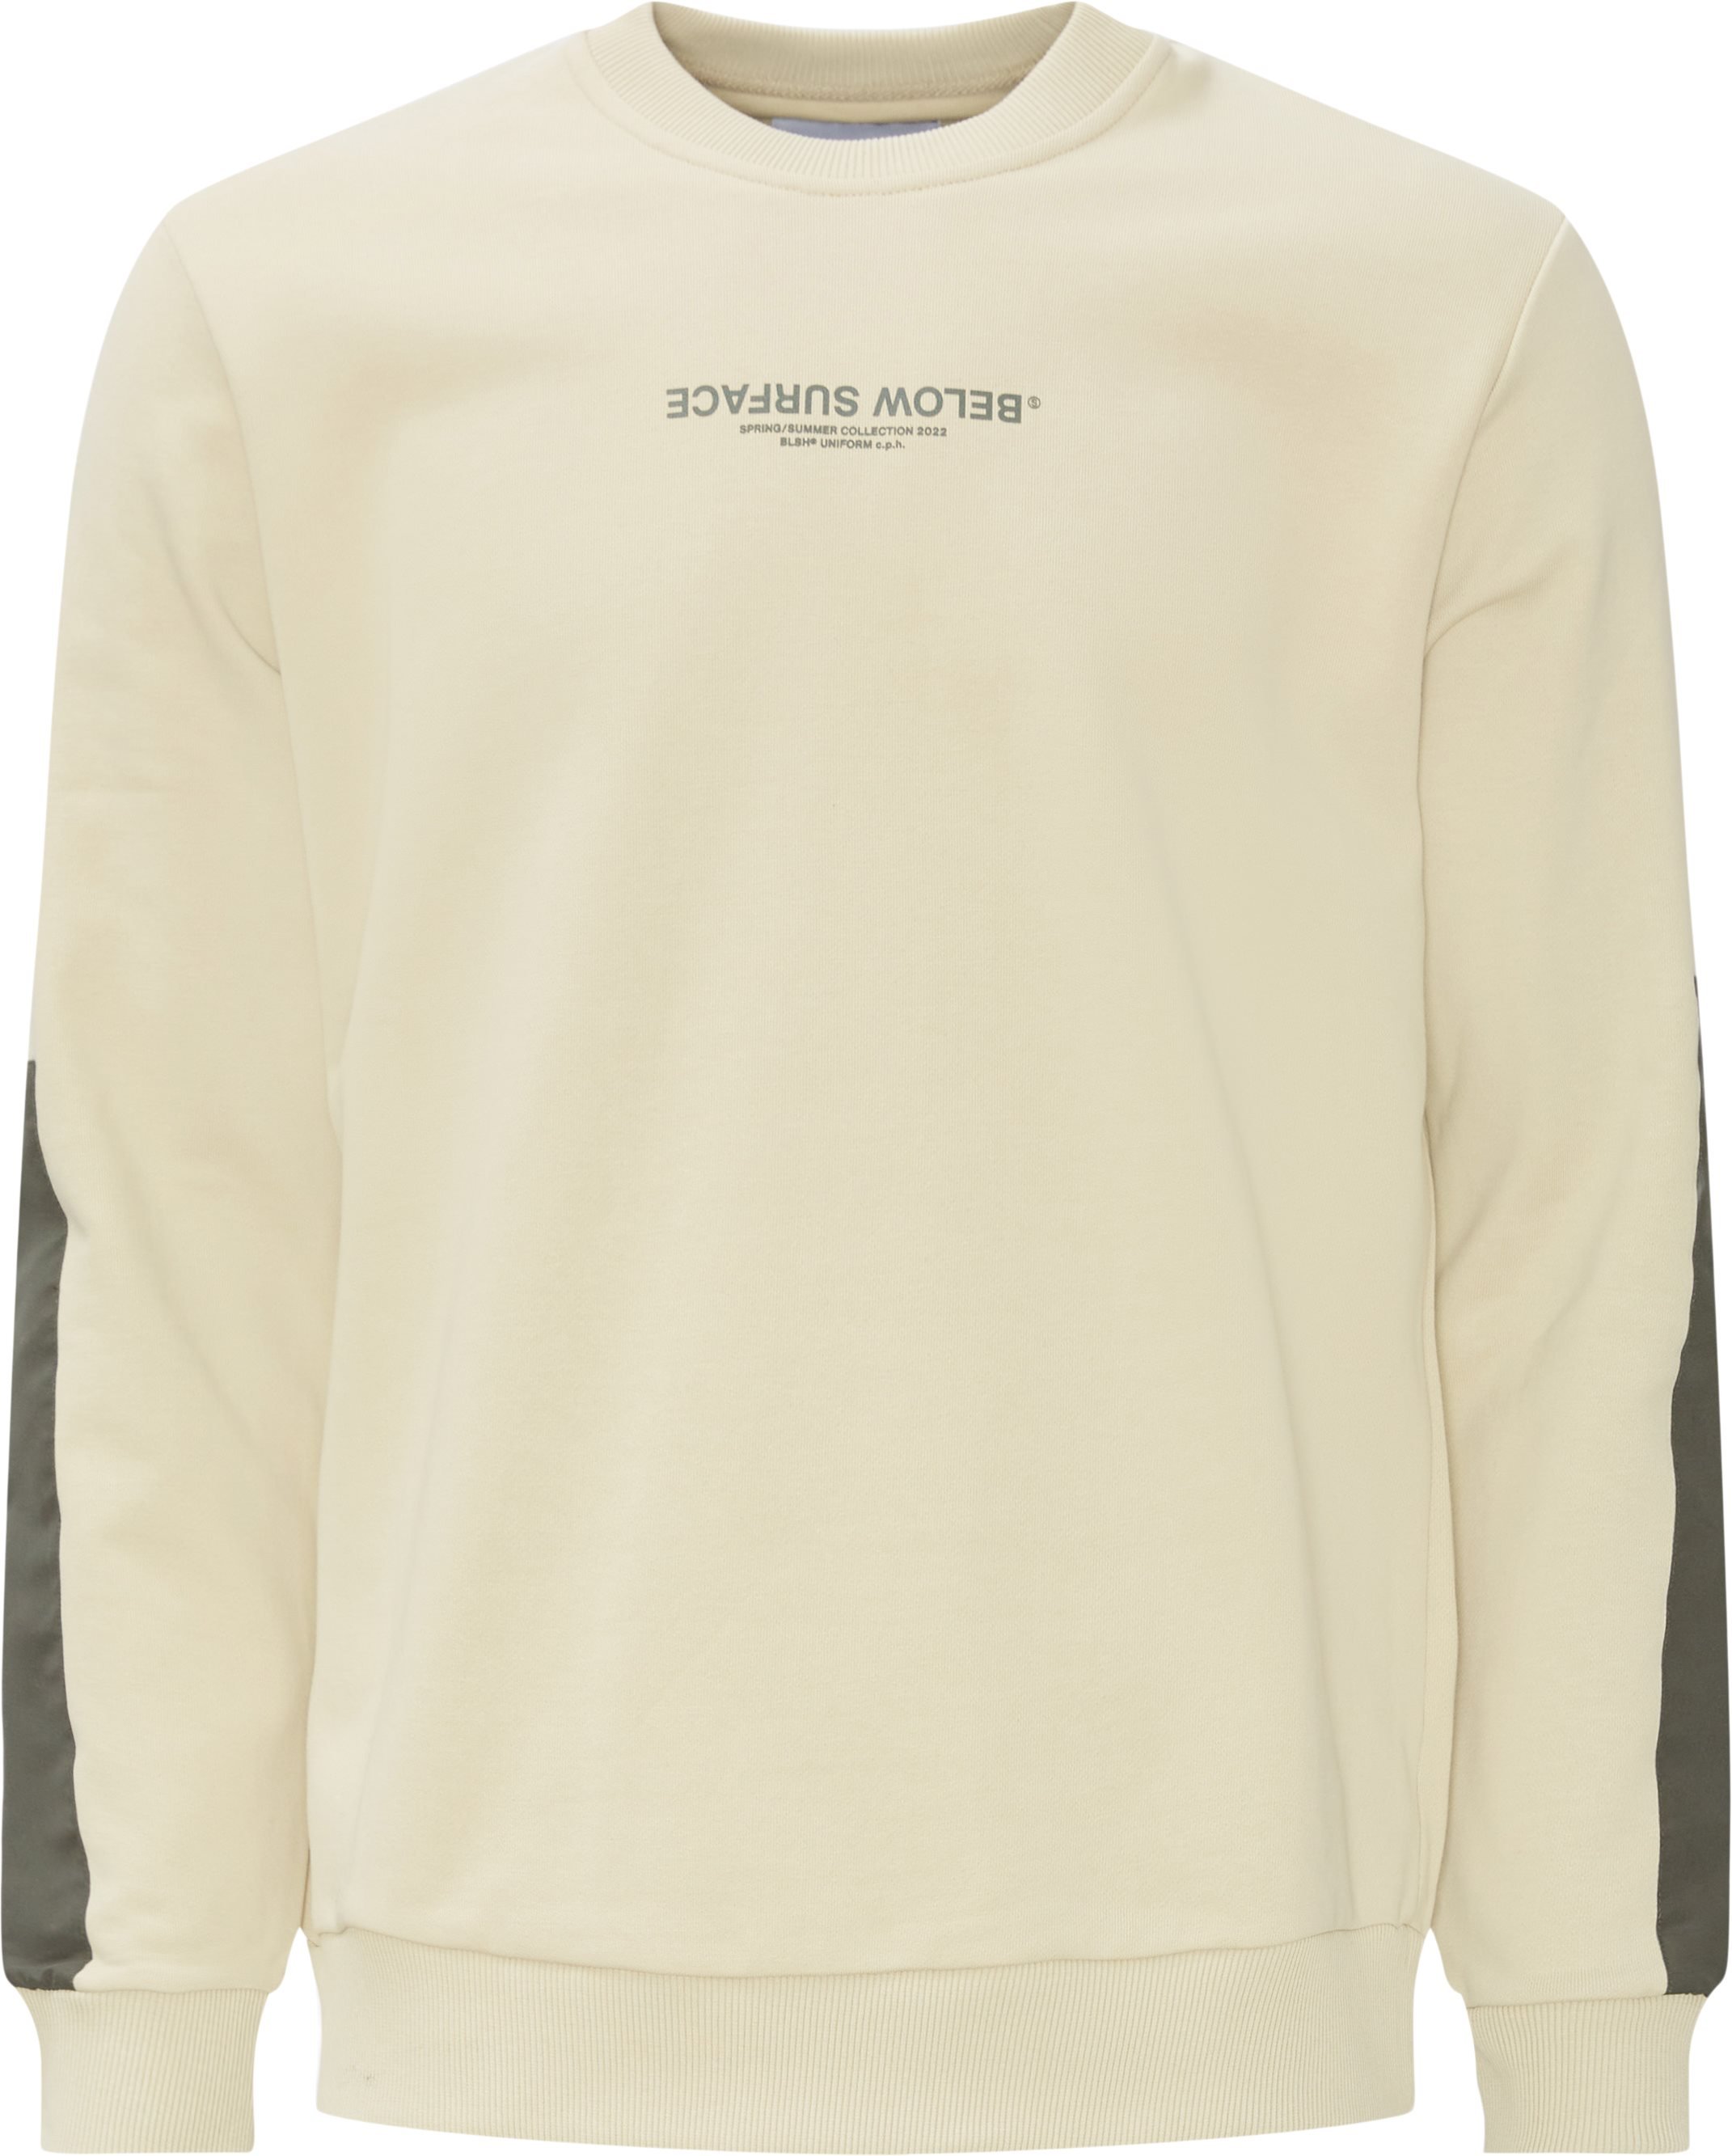 BELOW SURFACE Sweatshirt - Sweatshirts - Regular fit - Sand